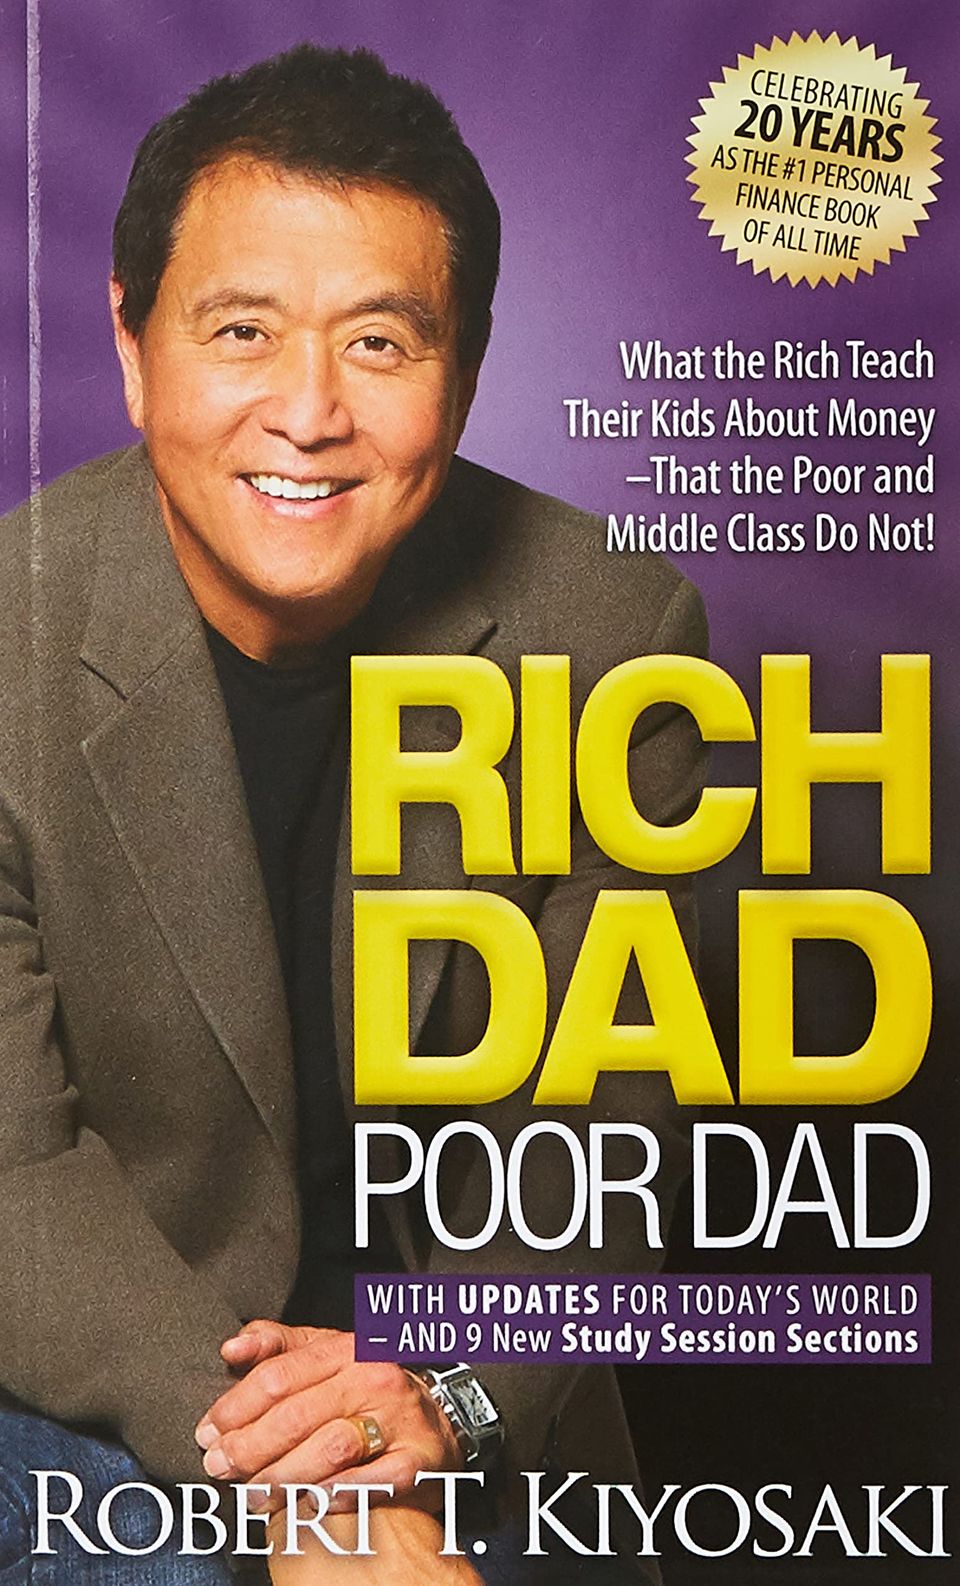 Rich Dad, Poor Dad (Robert Kiyosaki) - Summary, Notes & Highlights